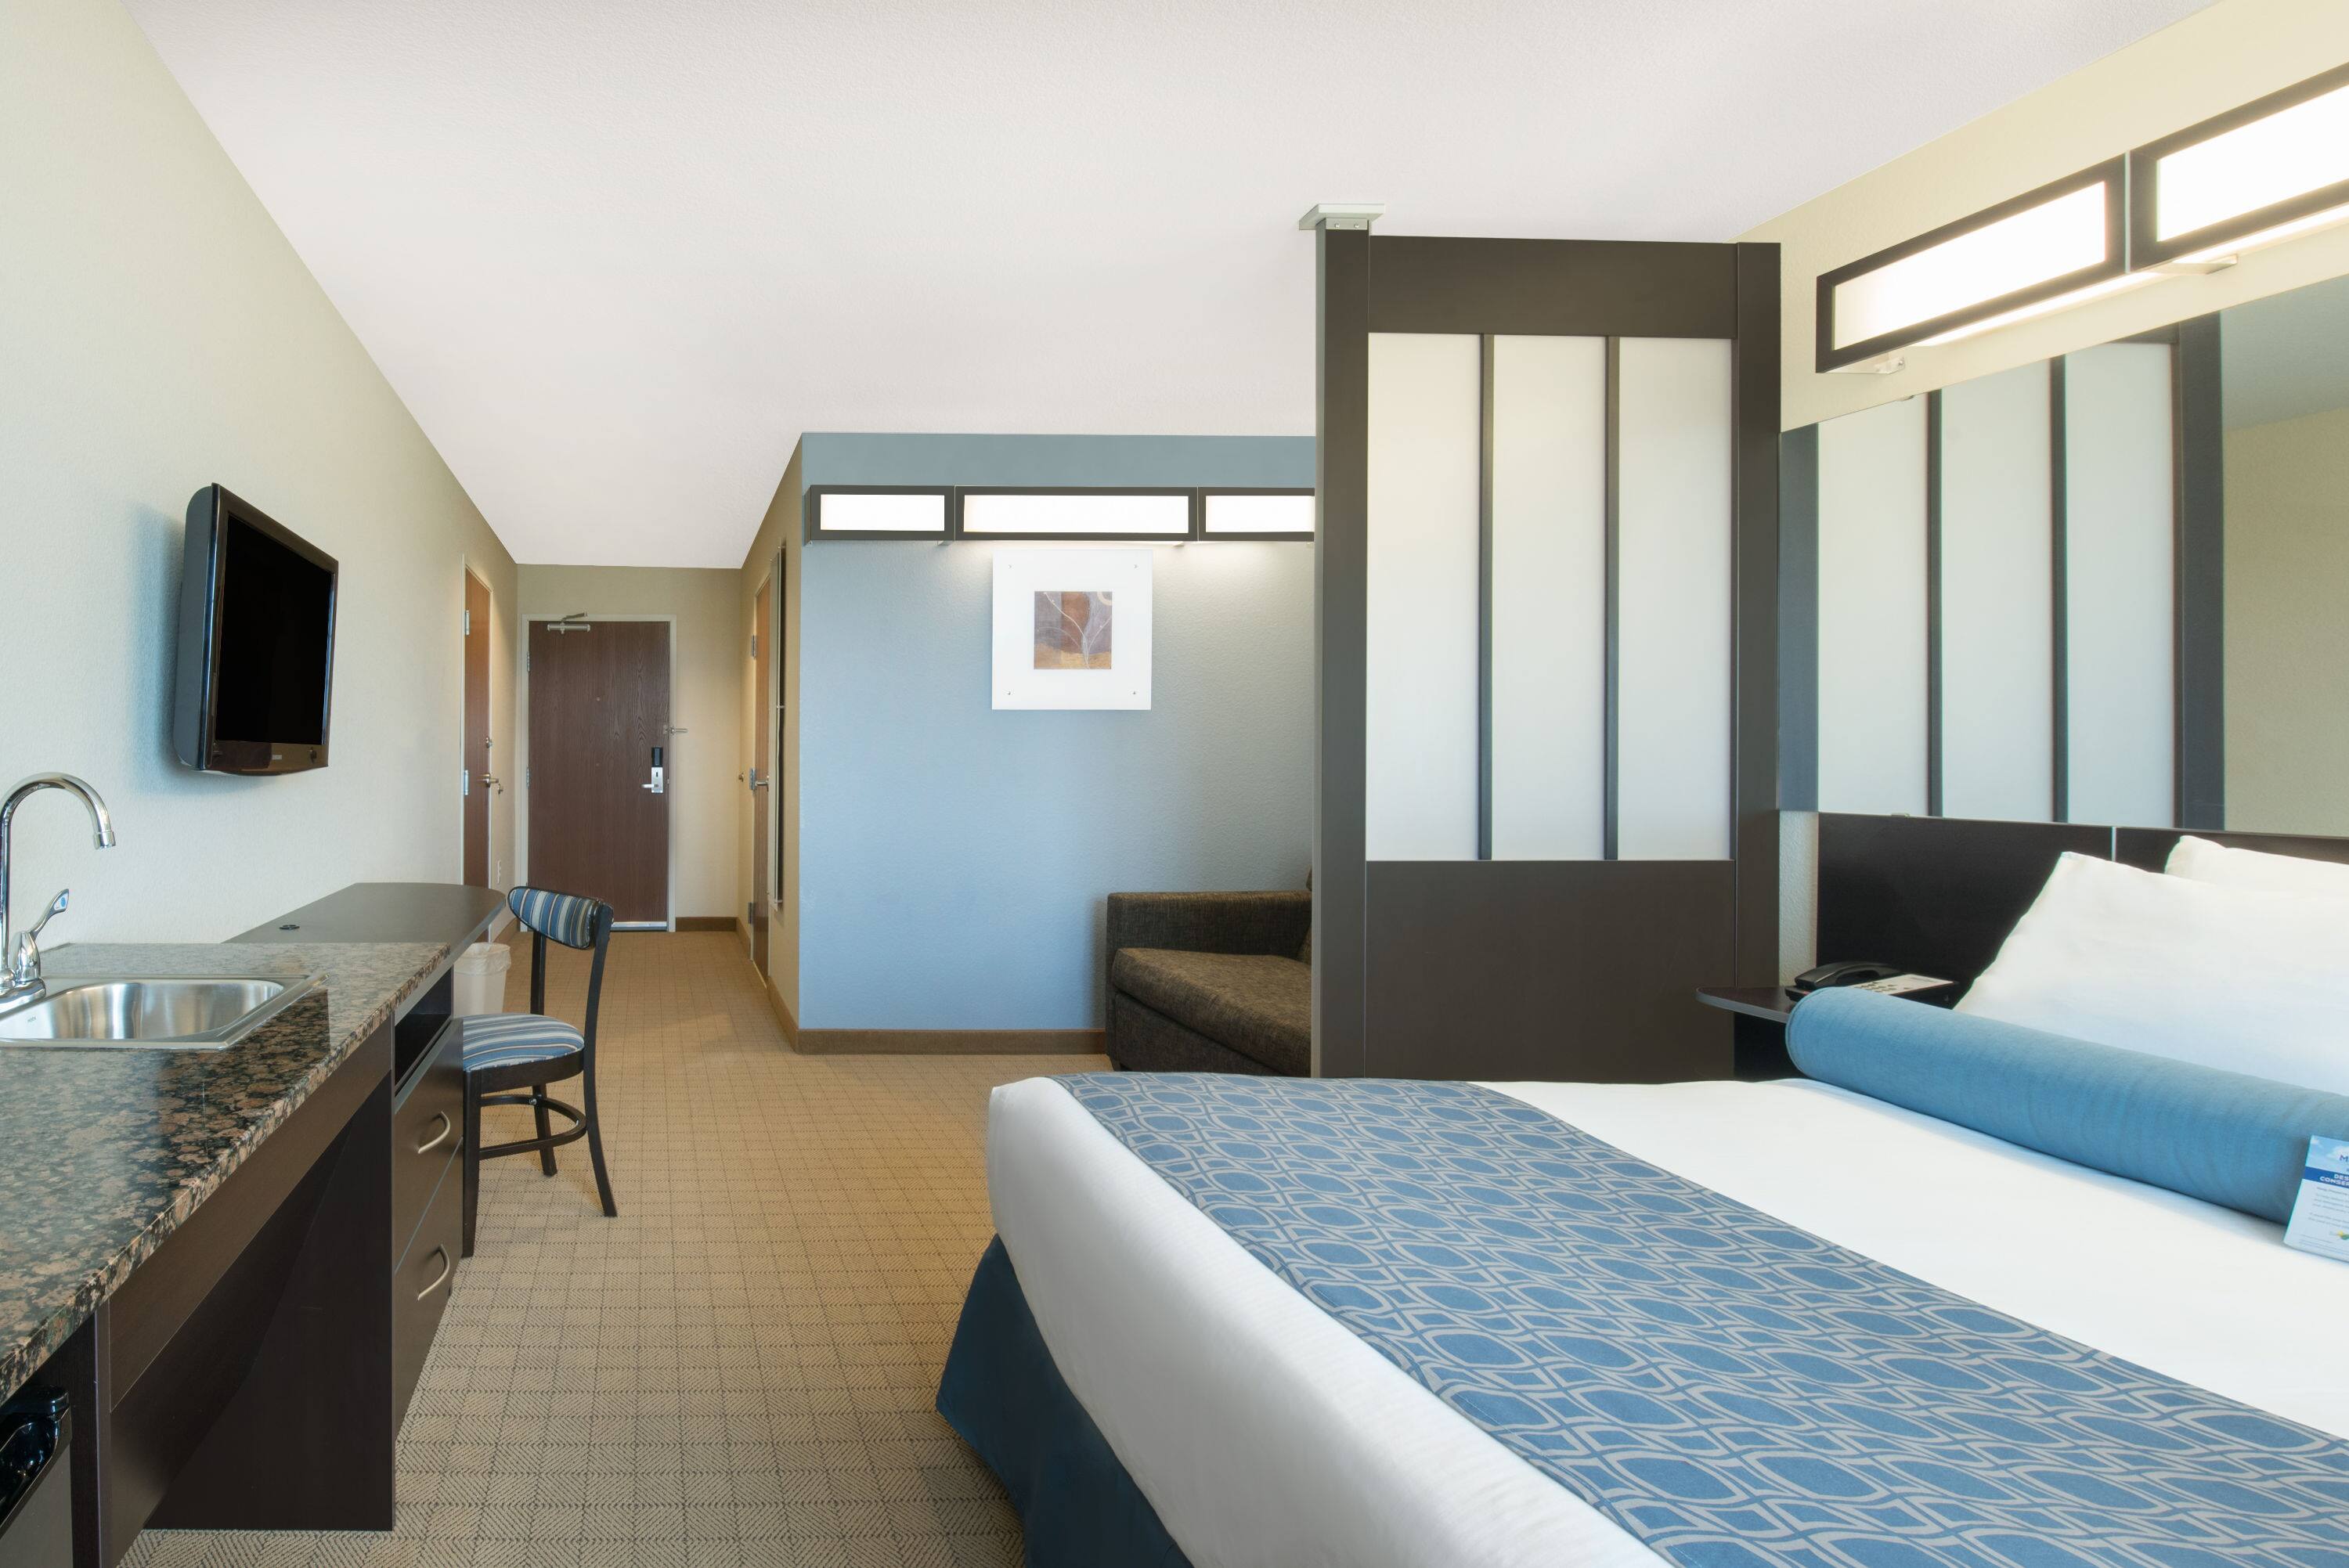 microtel inn & suites by wyndham salt lake city airport, n tommy tompson rd, salt lake city, ut